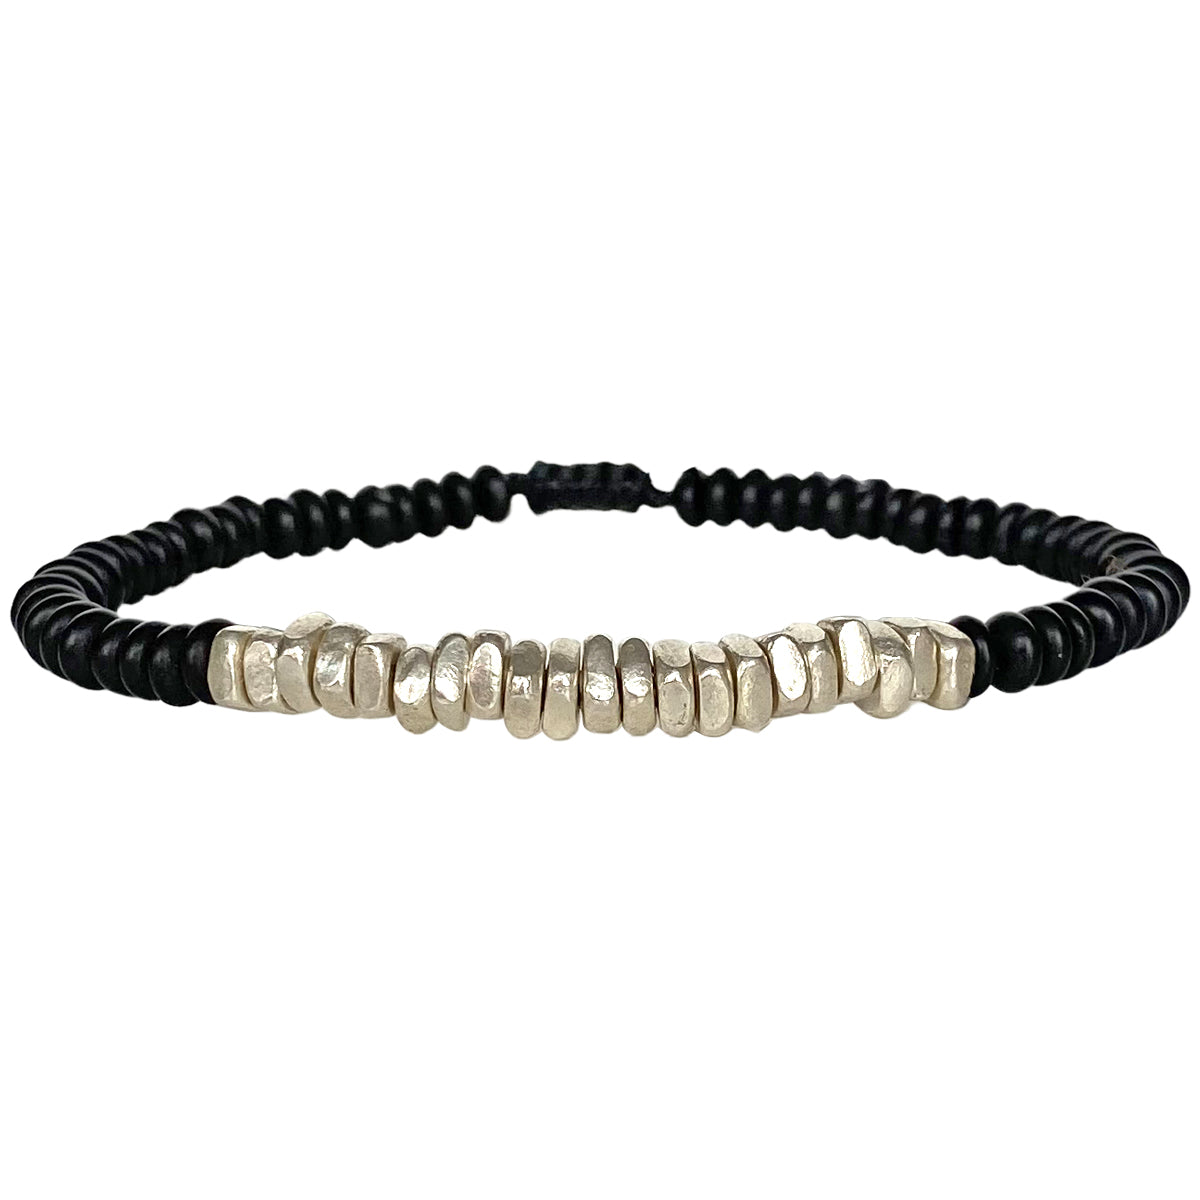 Handmade Stone Bracelet for Him - Sterling Silver / Black Onyx